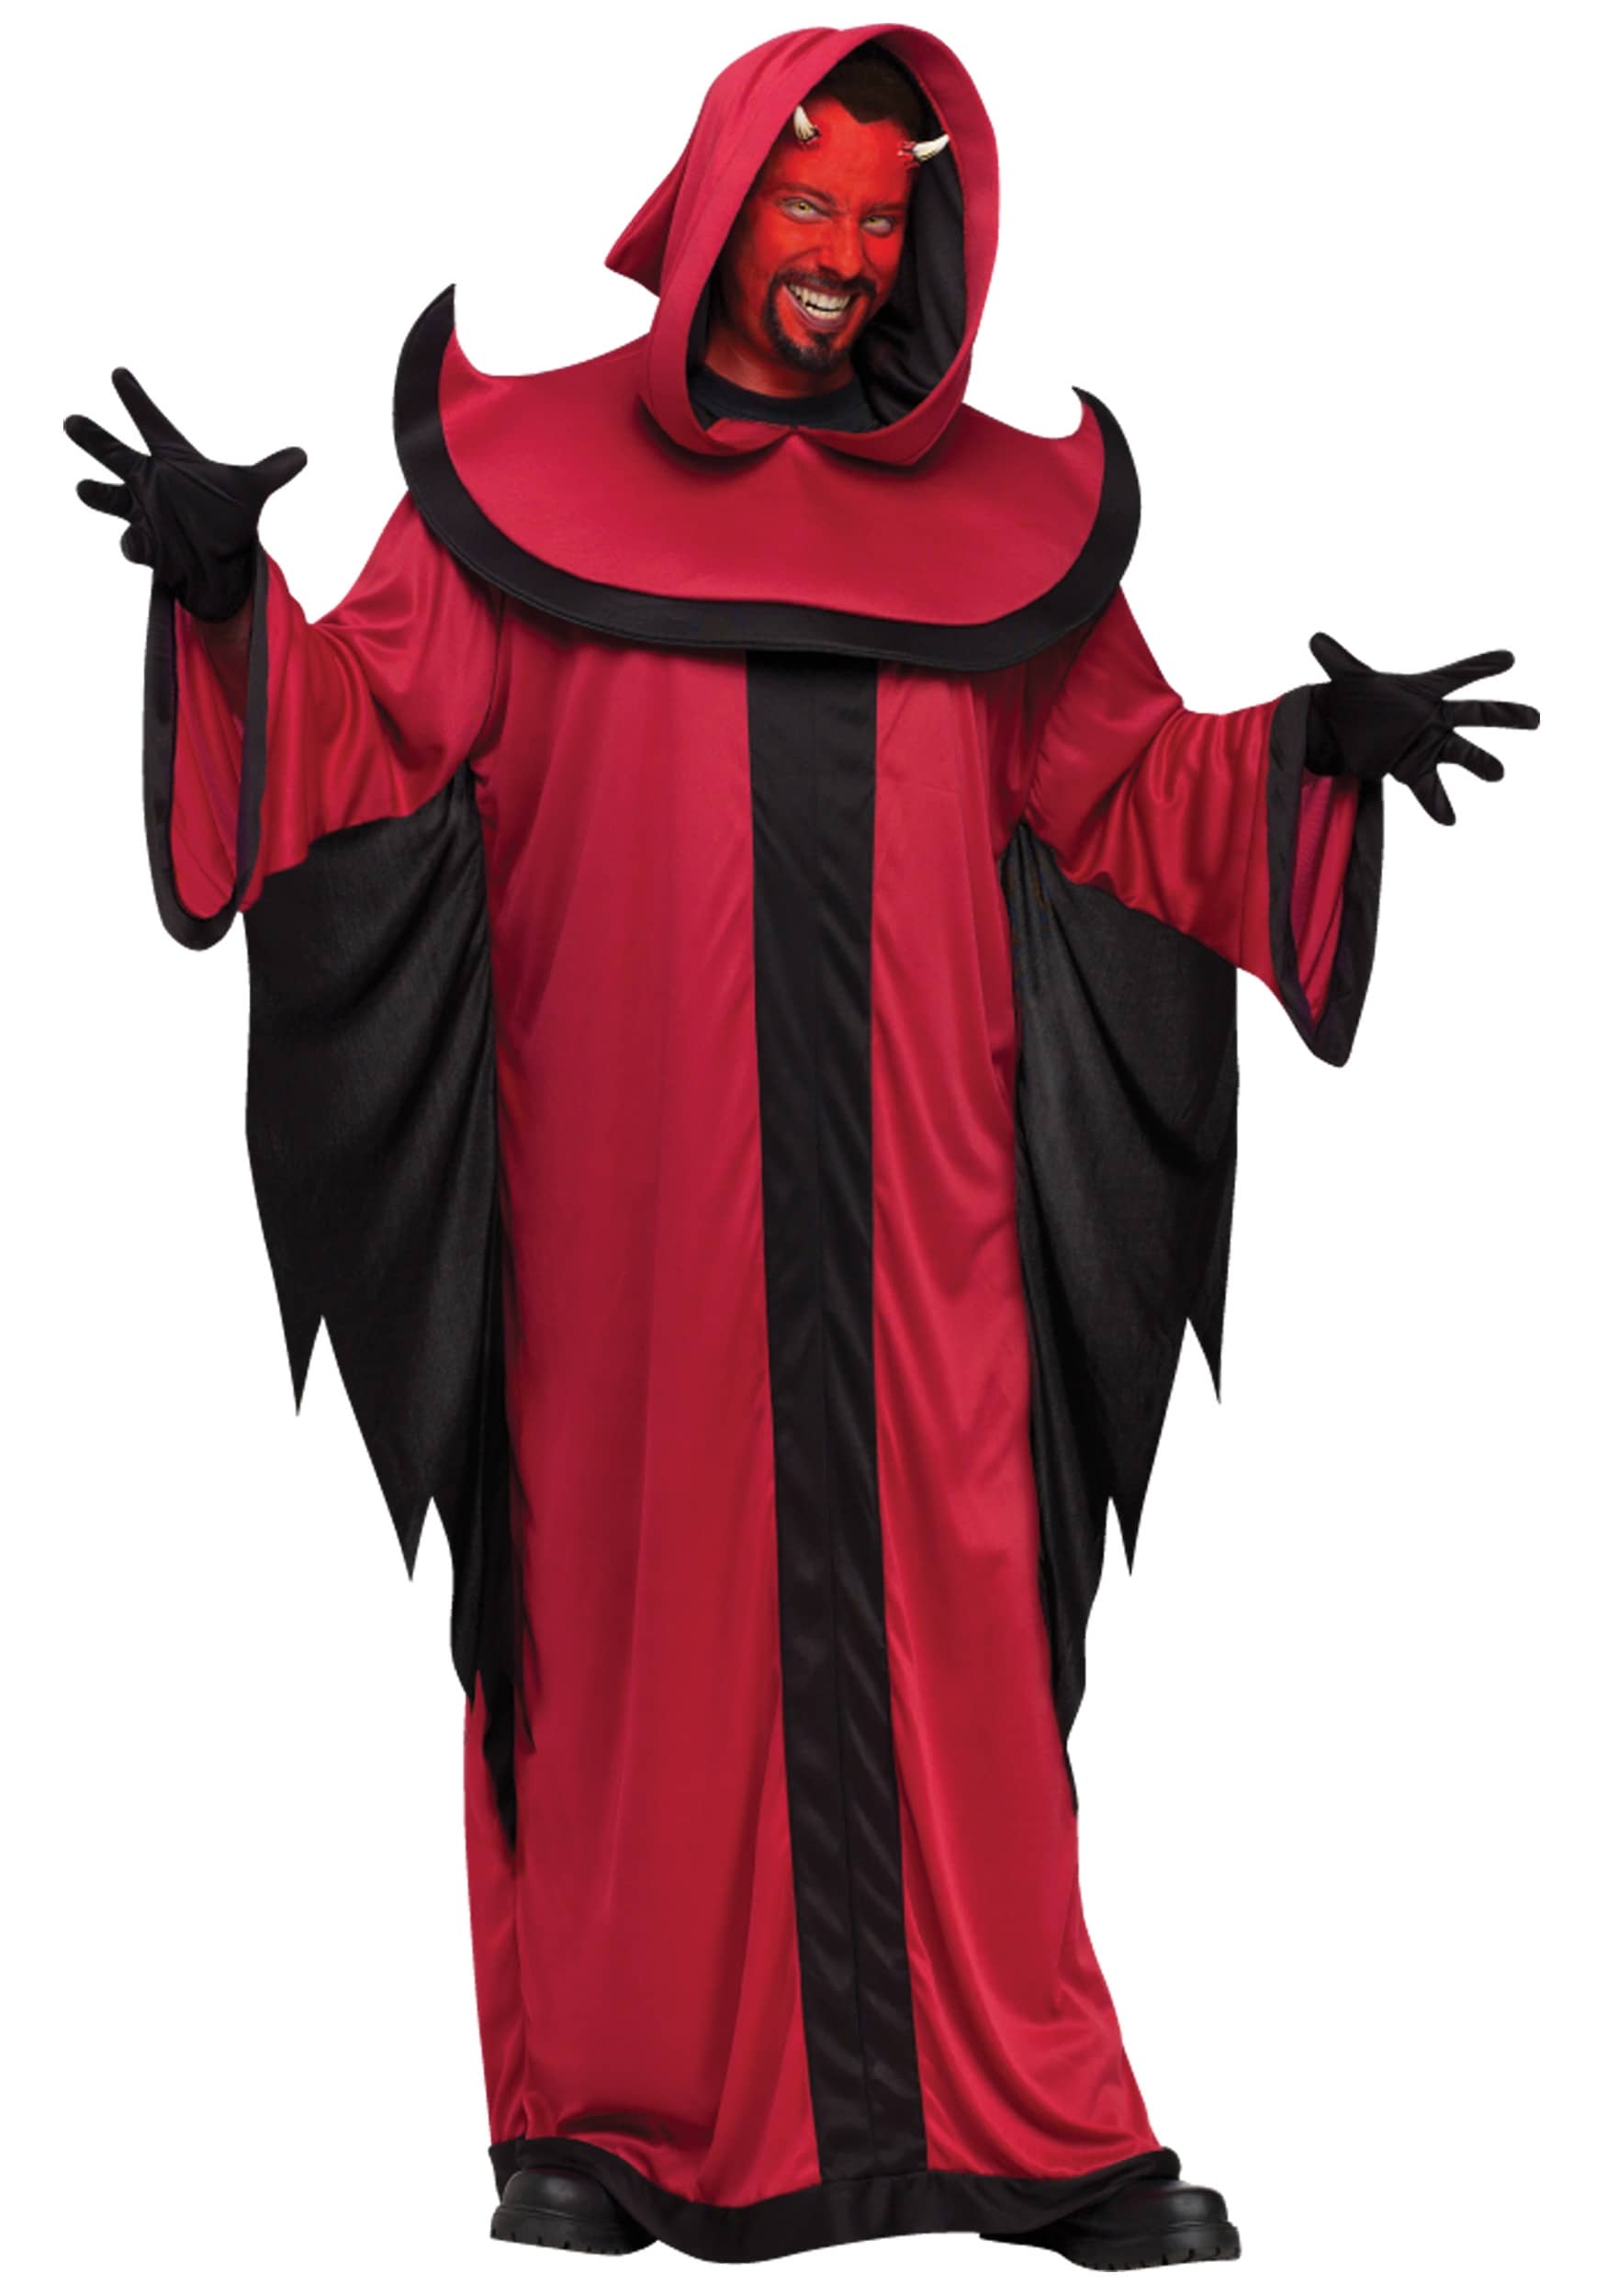 Typical Goofy Devil Costume